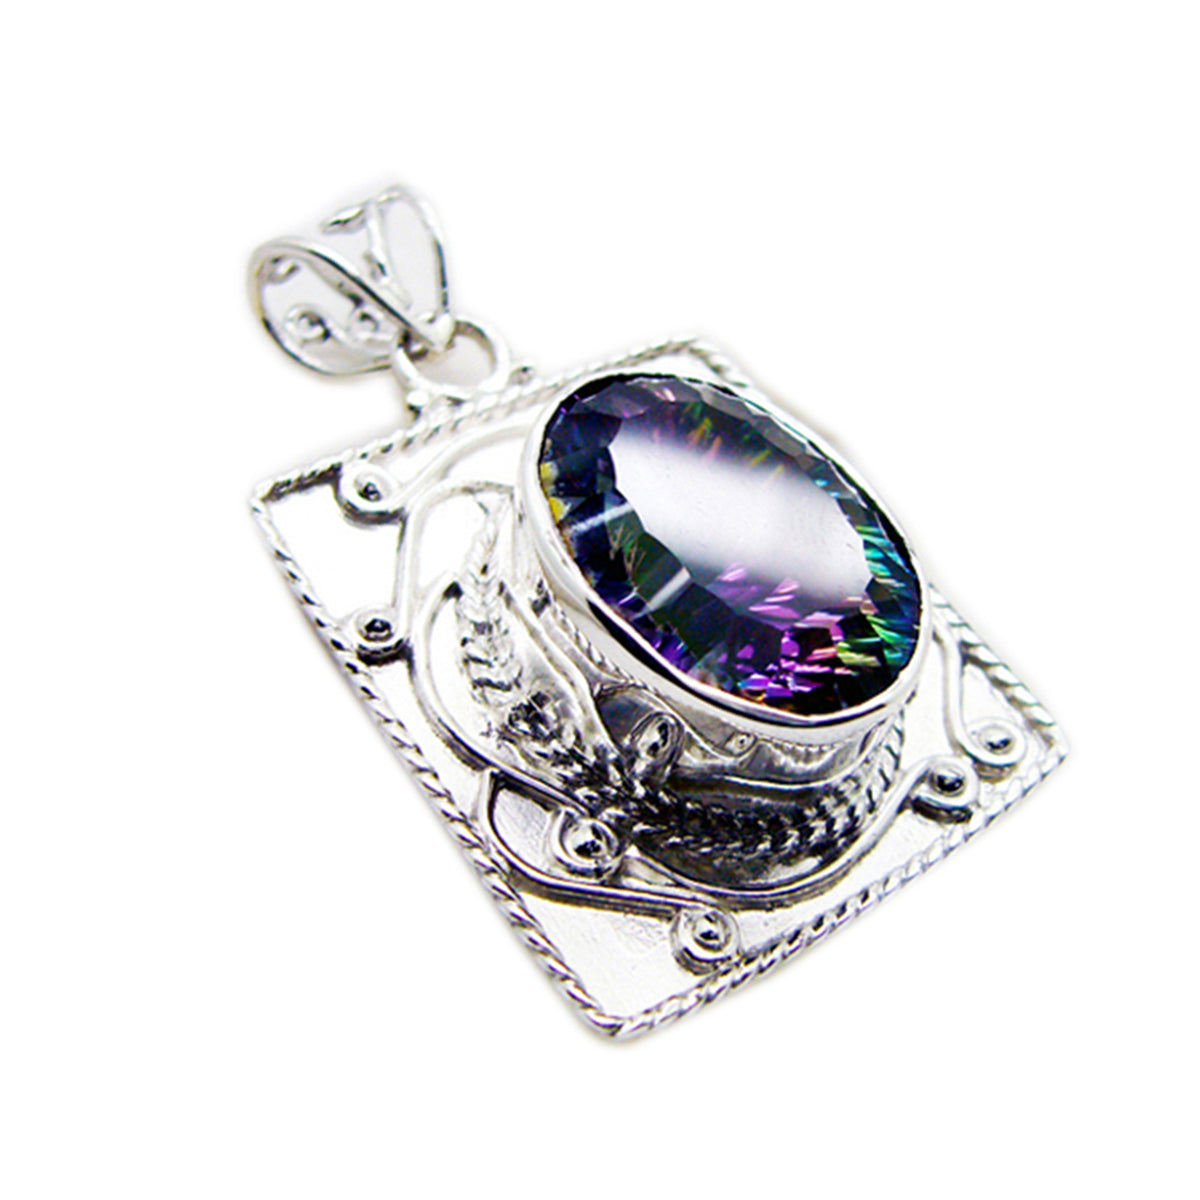 Riyo Easy Gemstone Oval Faceted Multi Color Mystic Quartz 1169 Sterling Silver Pendant Gift For Birthday